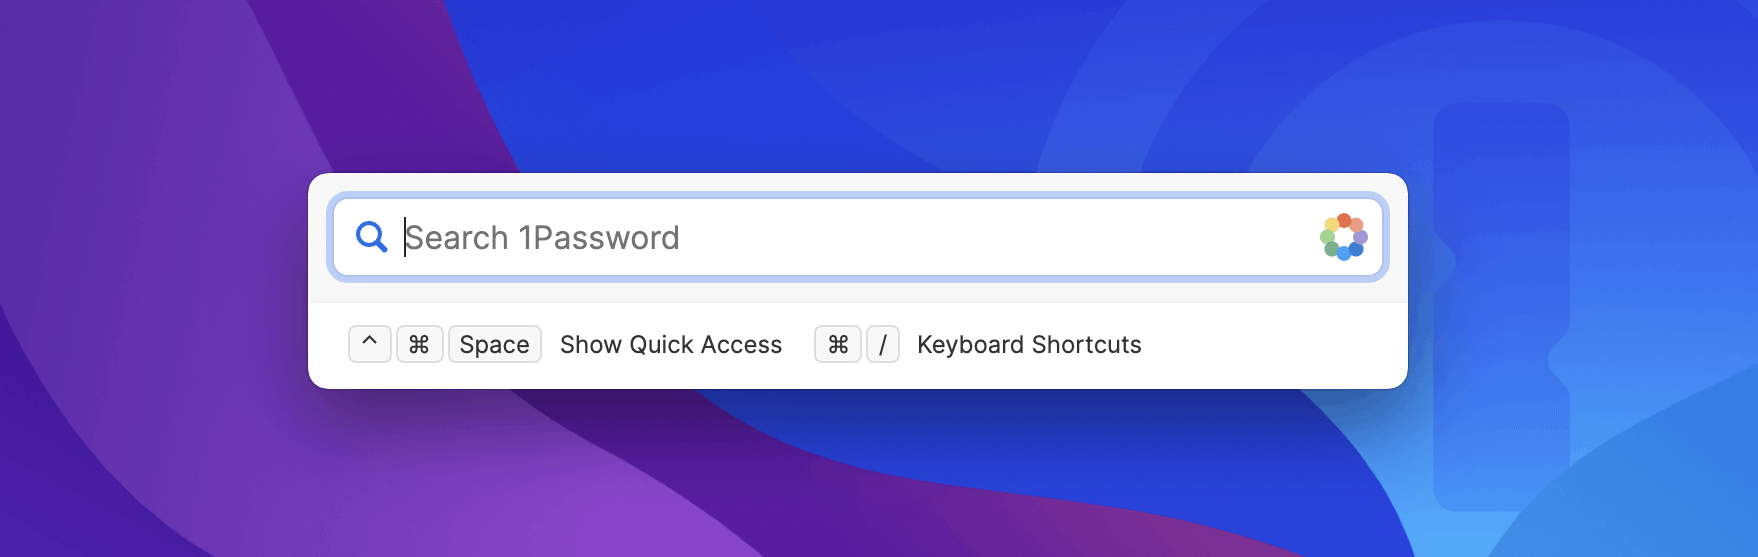 1Password Quick Access running on Mac